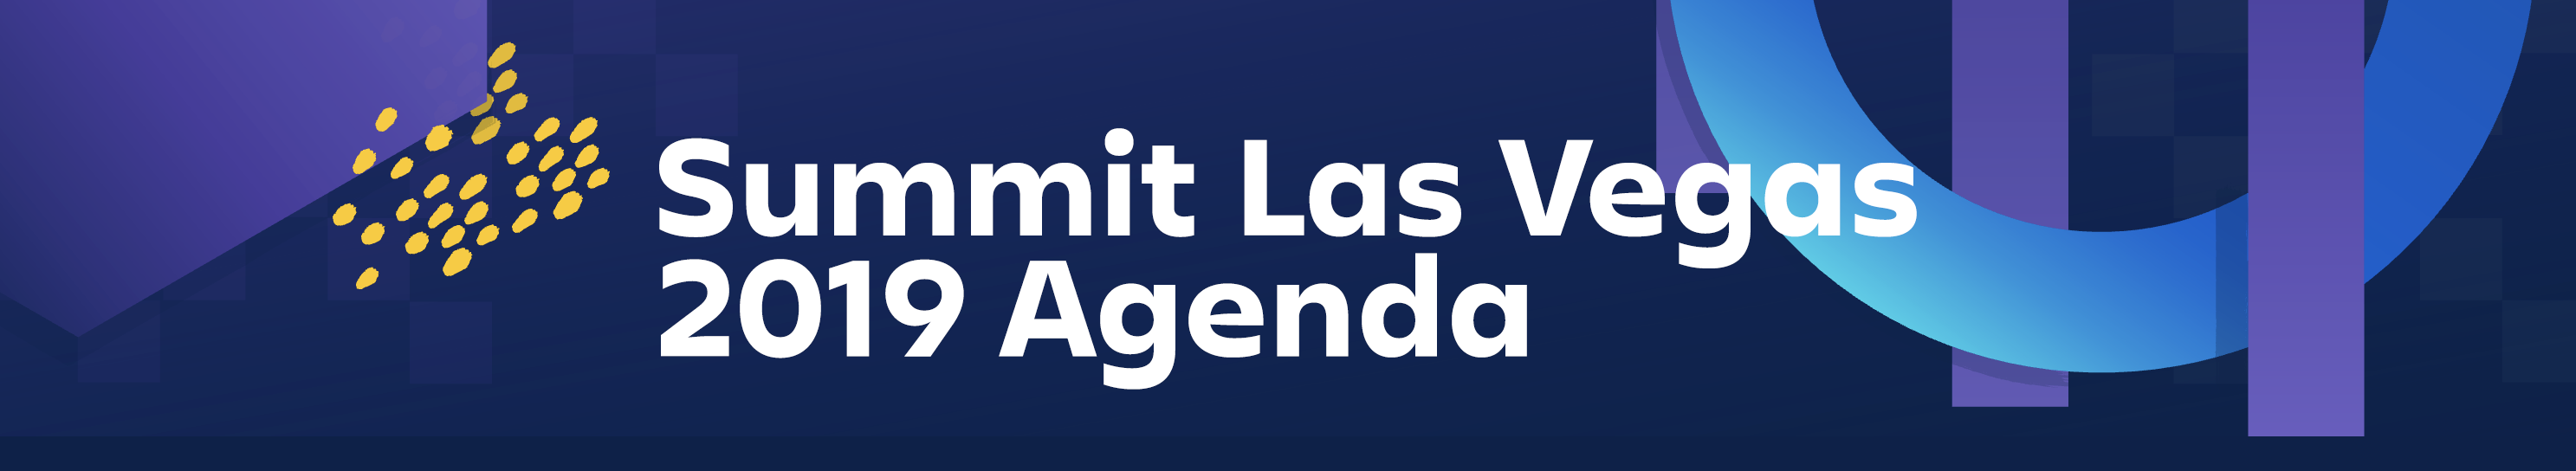 Summit Las Vegas agenda is LIVE! Atlassian Community